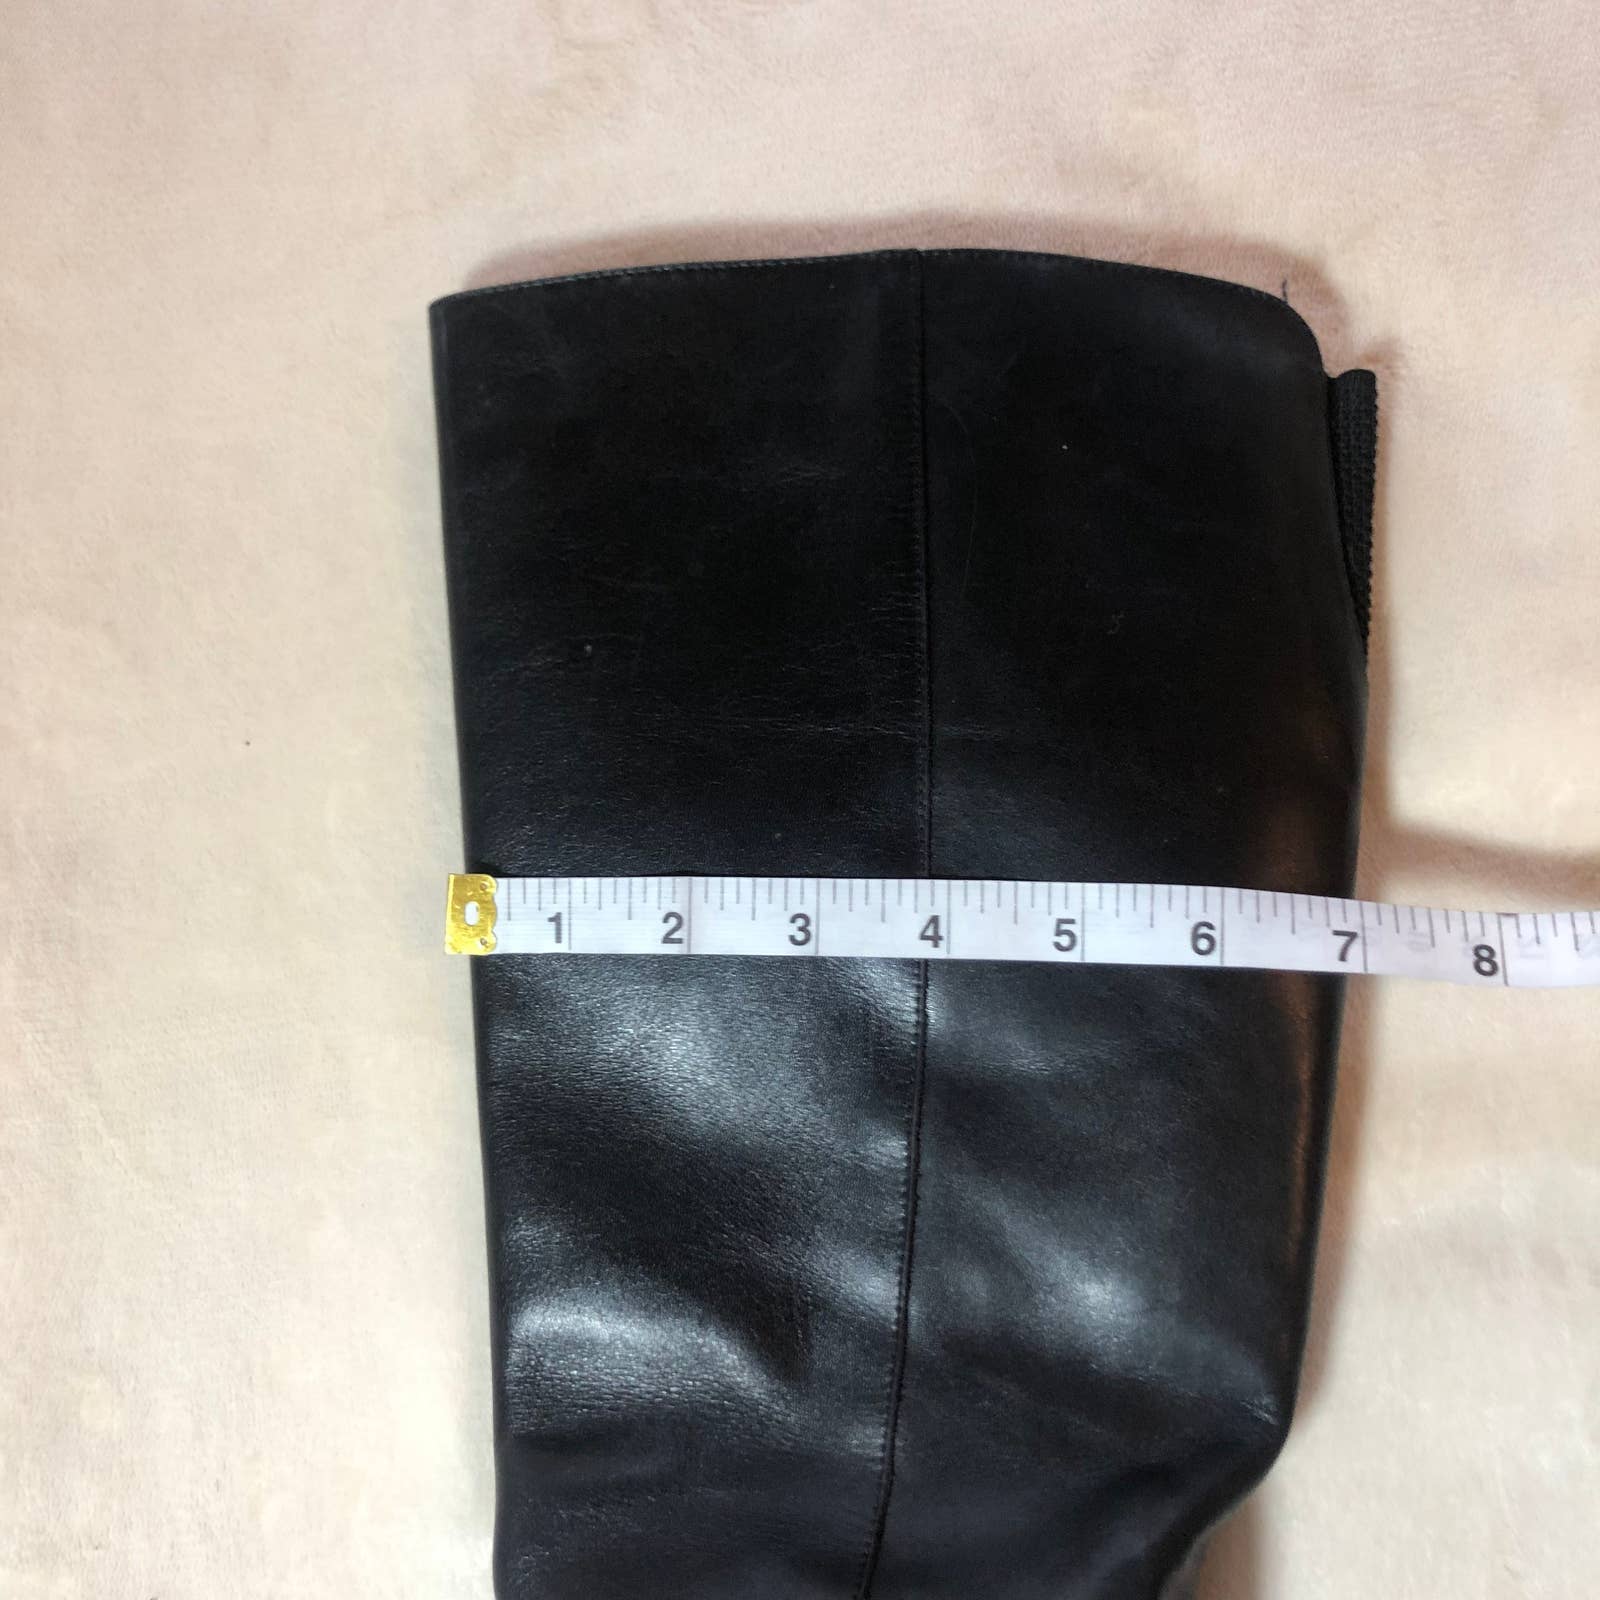 La Vallee Black Leather Boots - Size 5.5Markita's ClosetLa Vallee